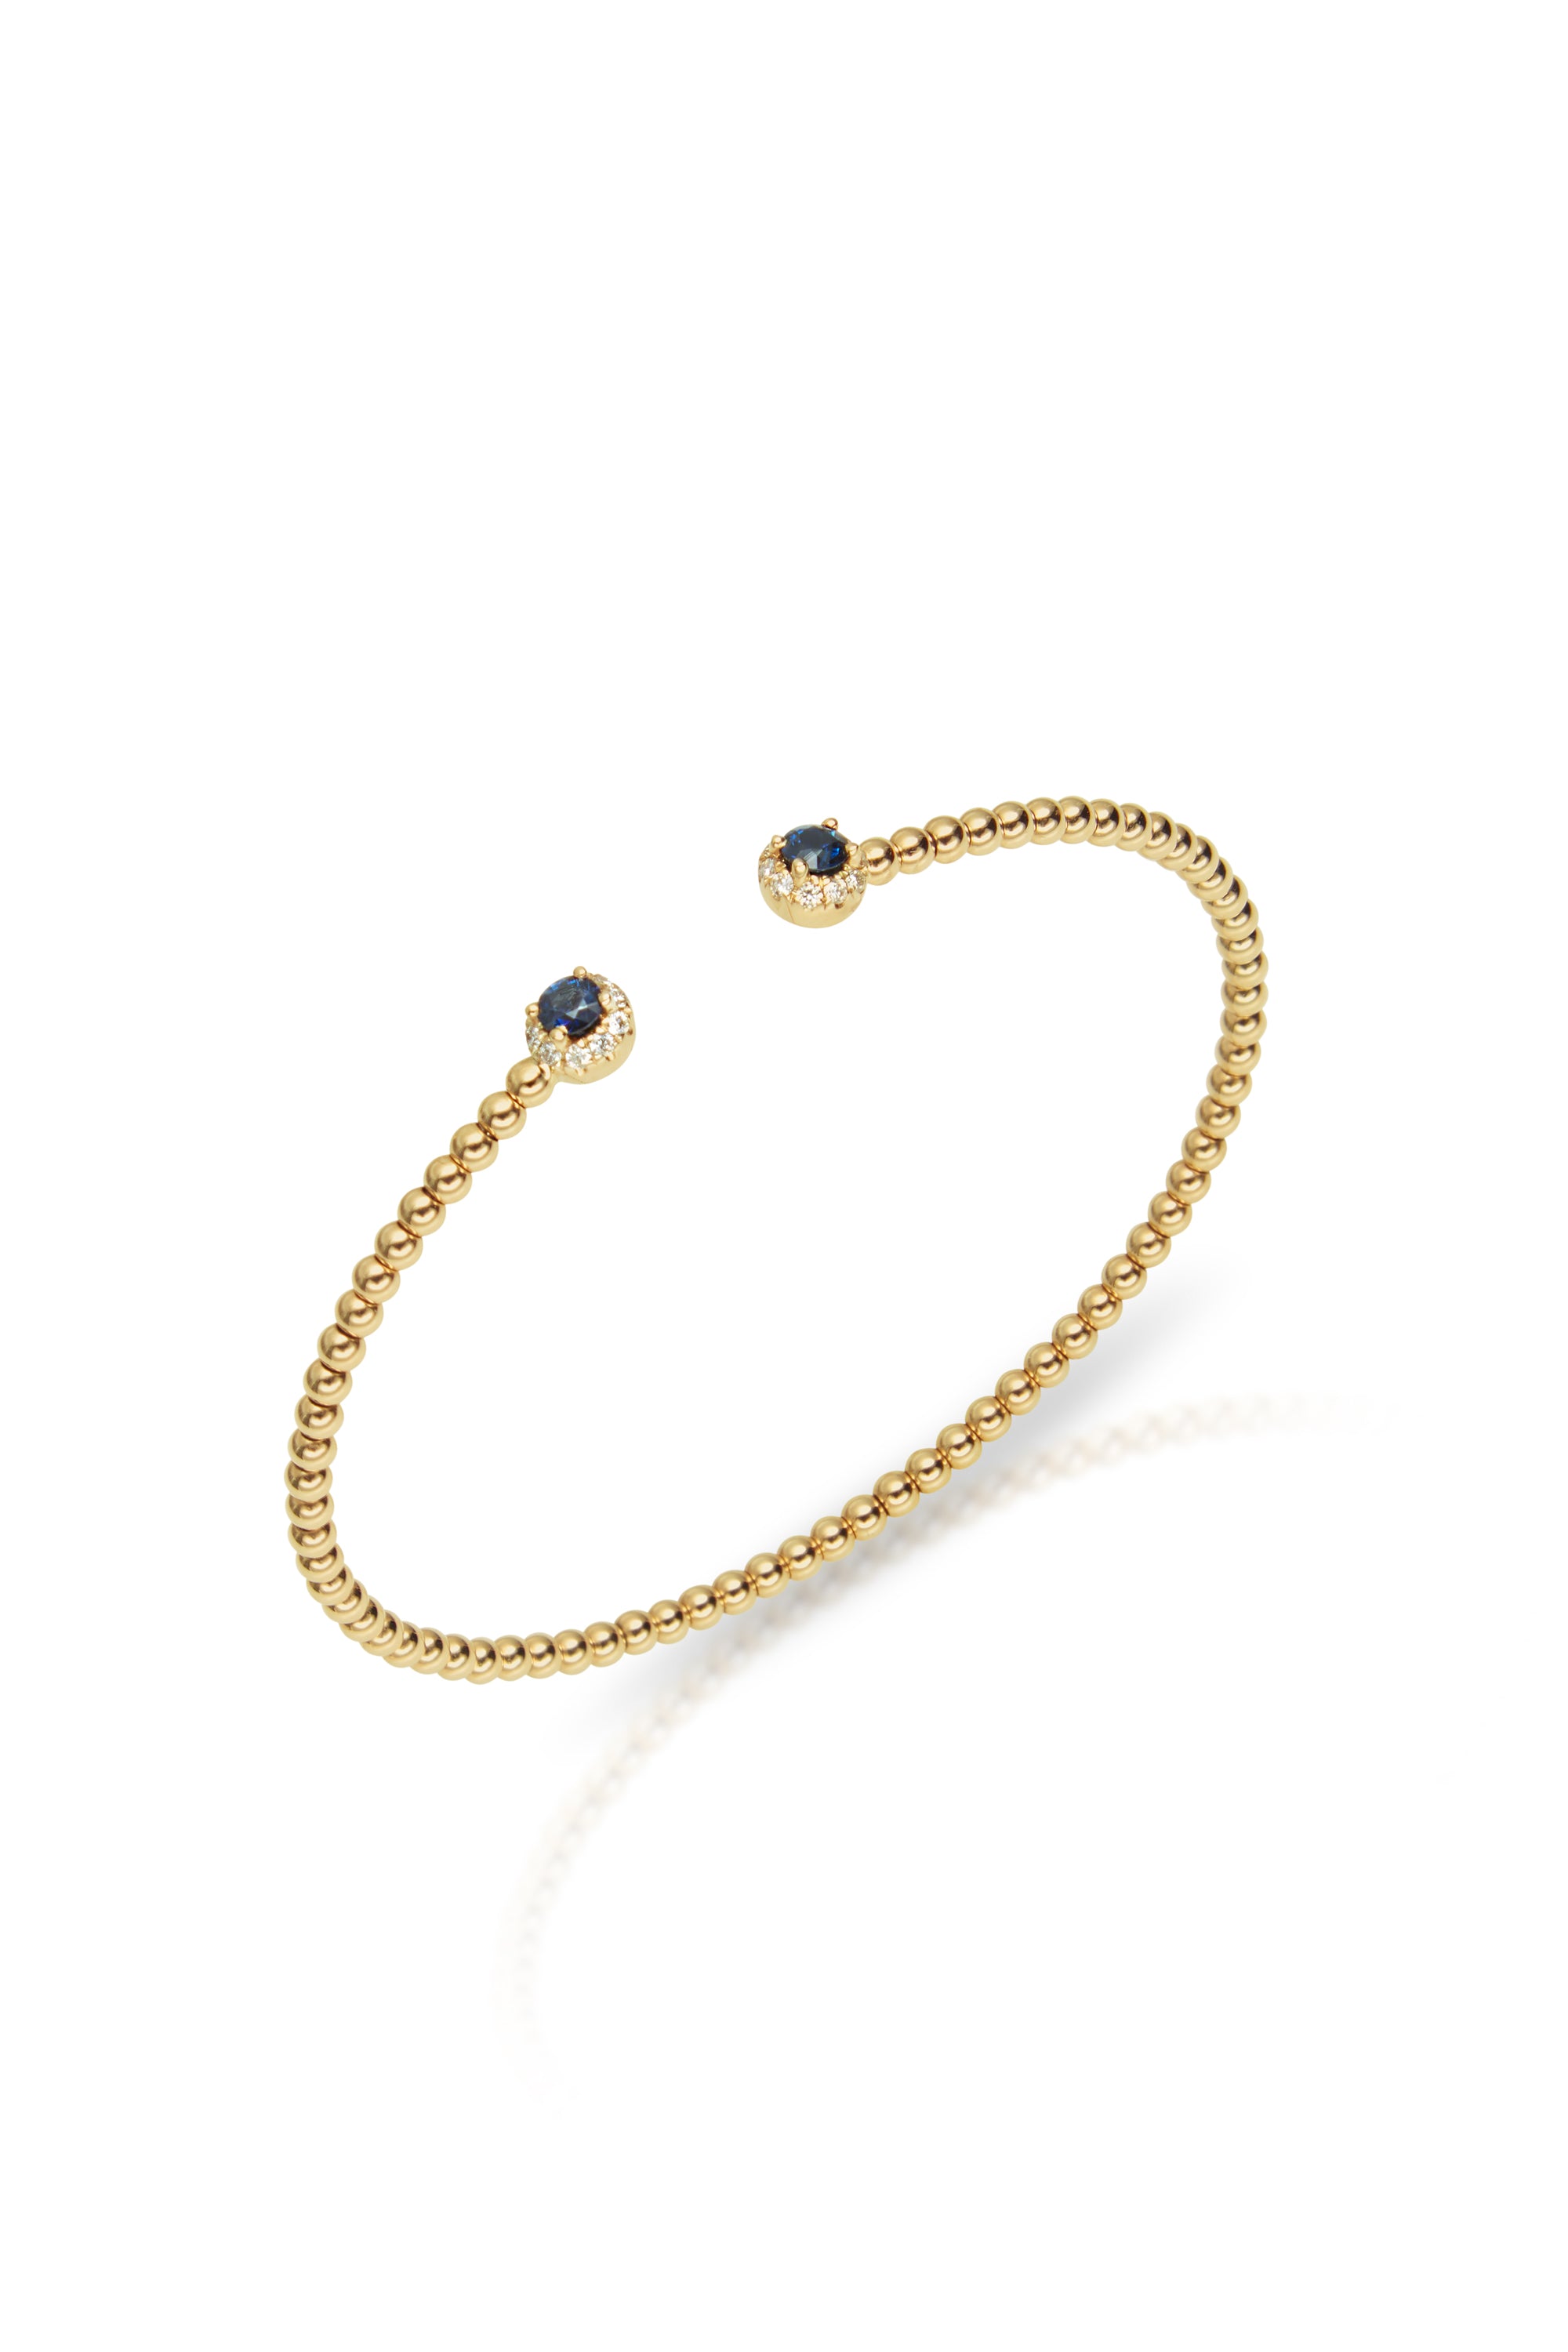 14K Yellow Gold Bujukan bead split cuff bracelet with sapphire and diamond